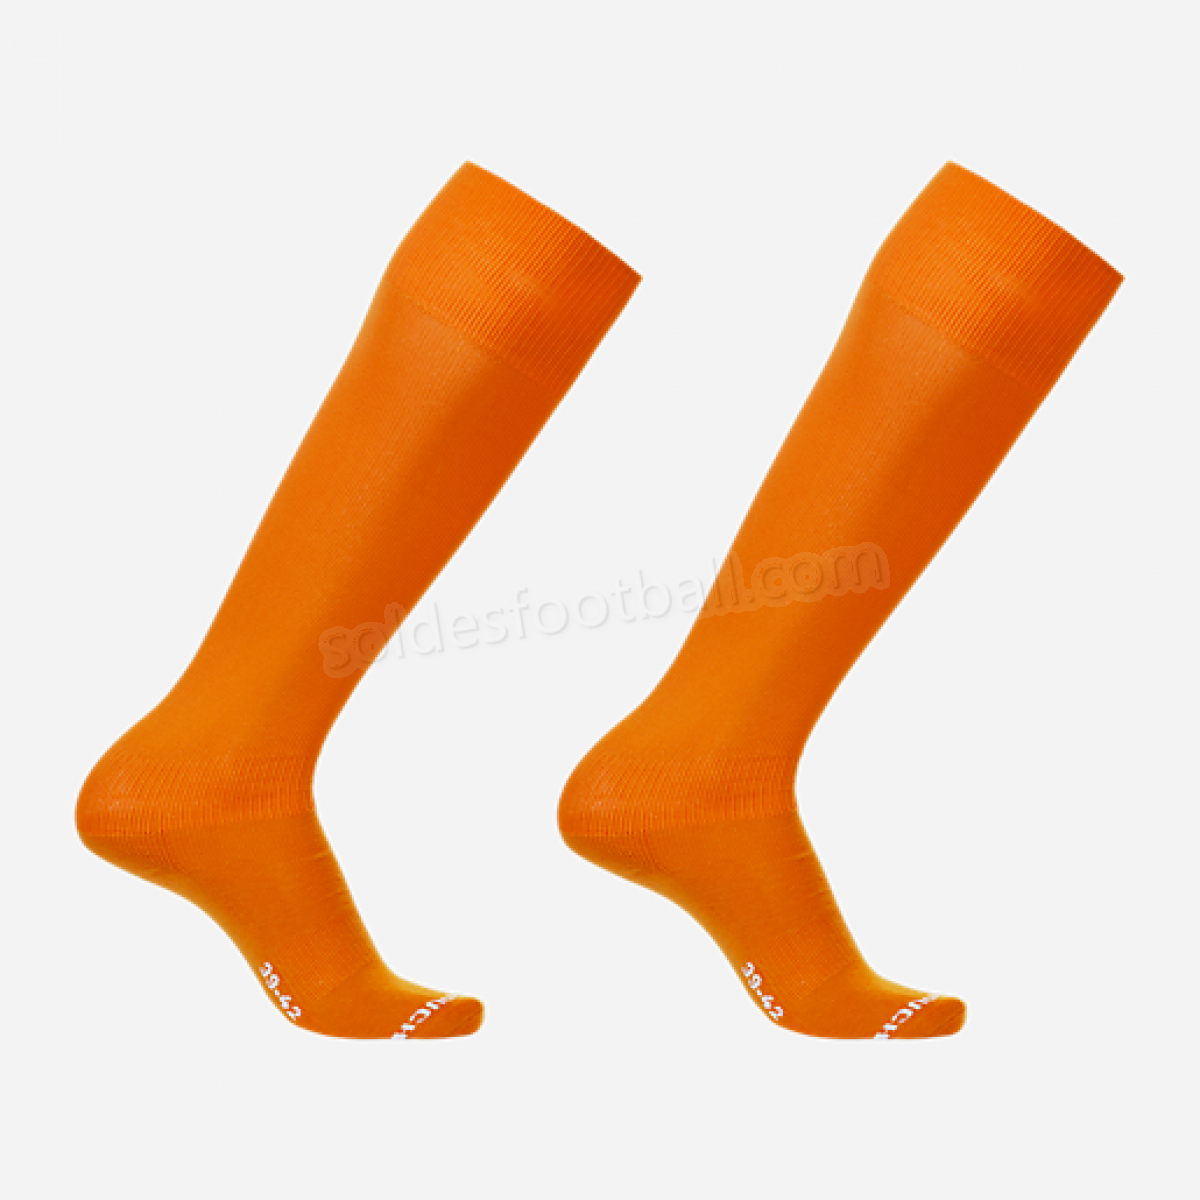 Chaussettes de football adulte Team Socks ORANGE-PRO TOUCH en solde - Chaussettes de football adulte Team Socks ORANGE-PRO TOUCH en solde